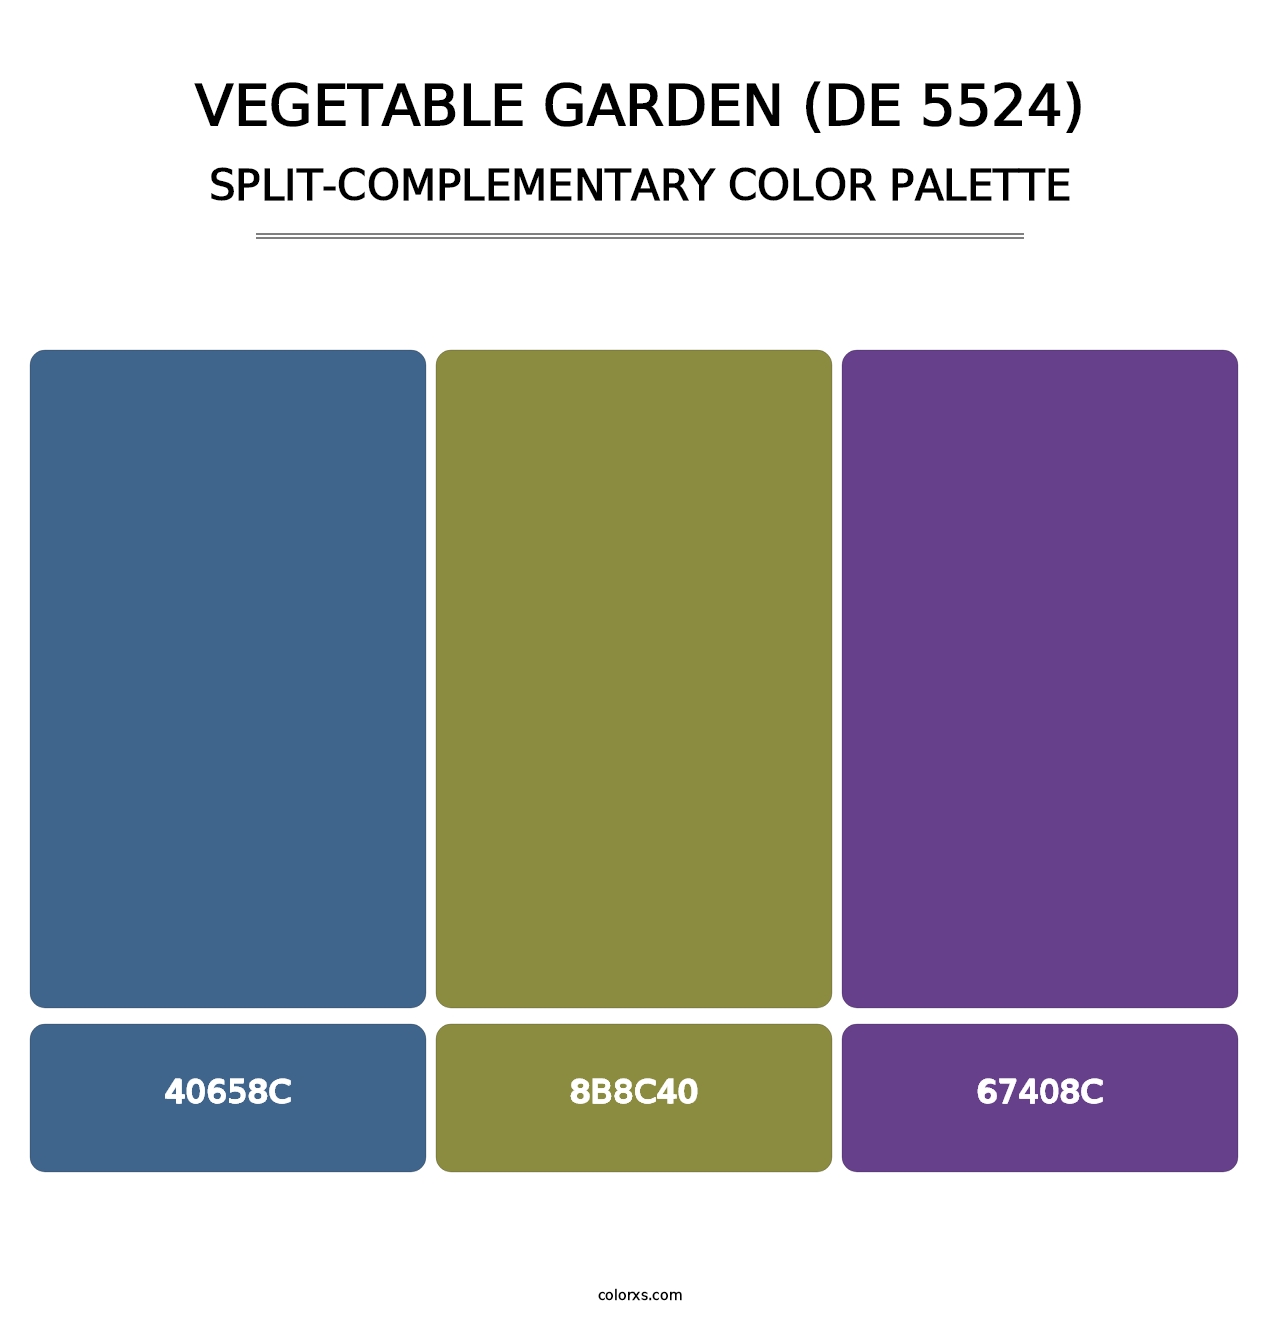 Vegetable Garden (DE 5524) - Split-Complementary Color Palette